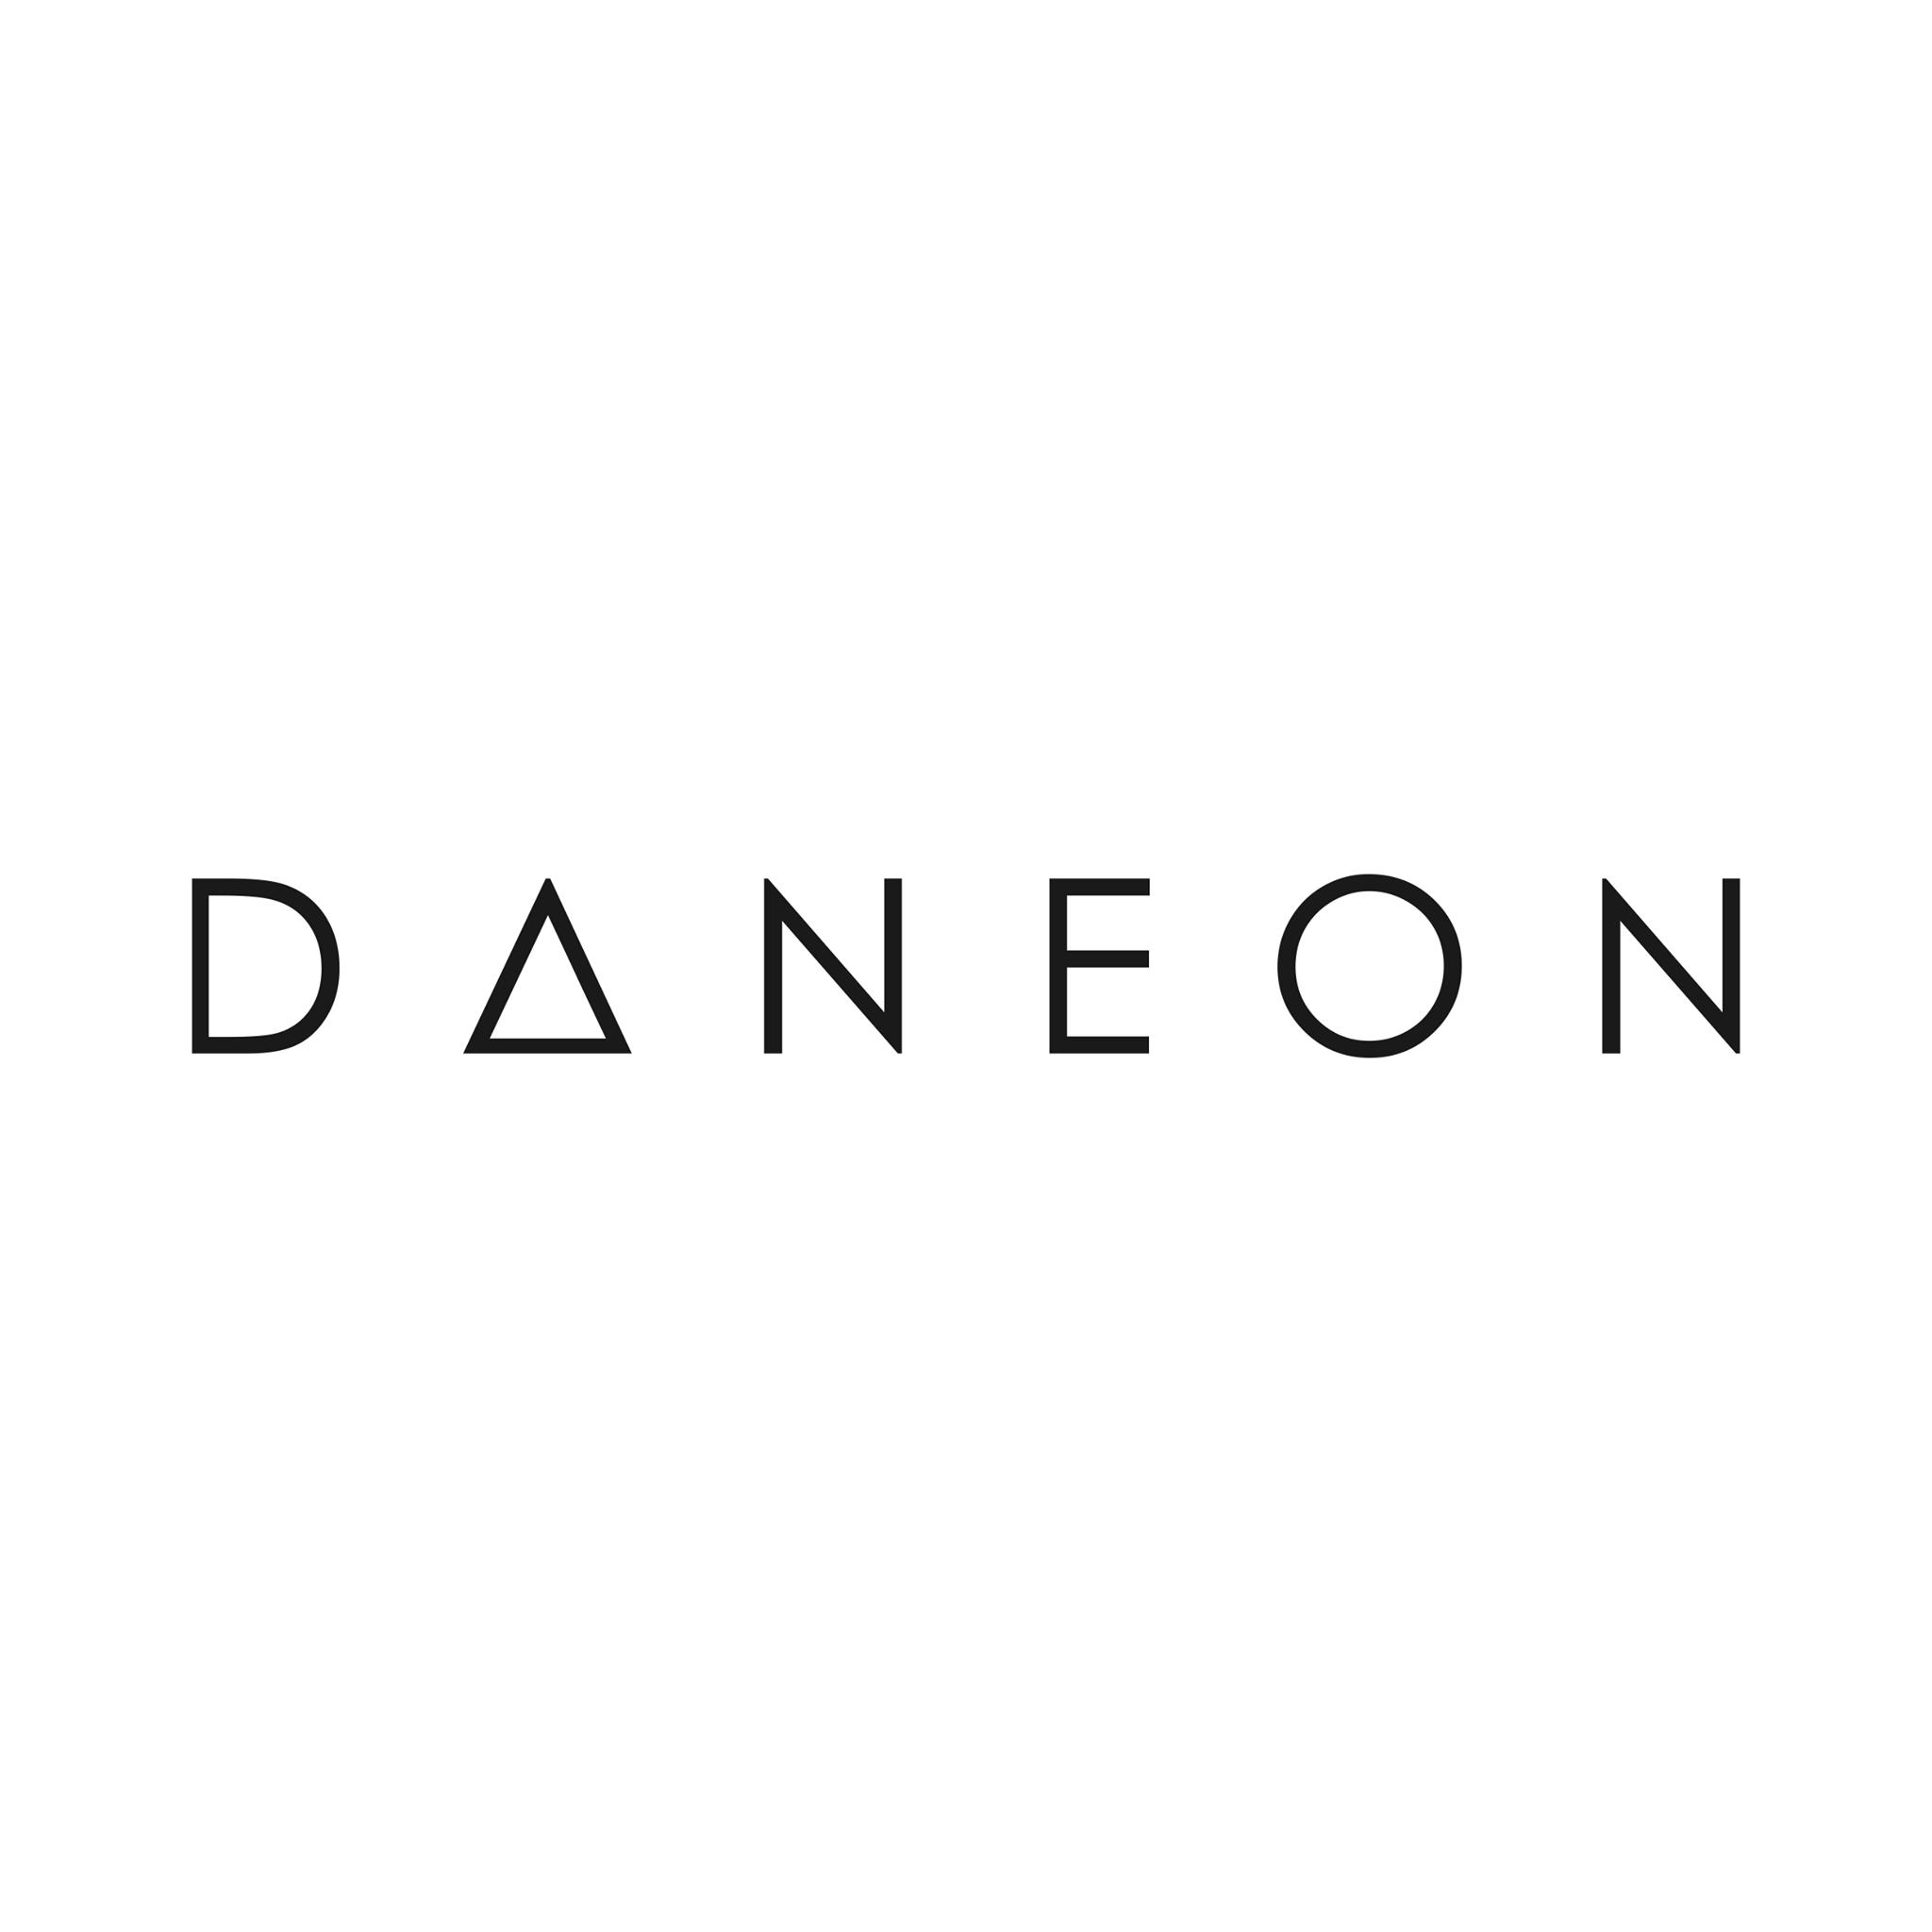 Daneon